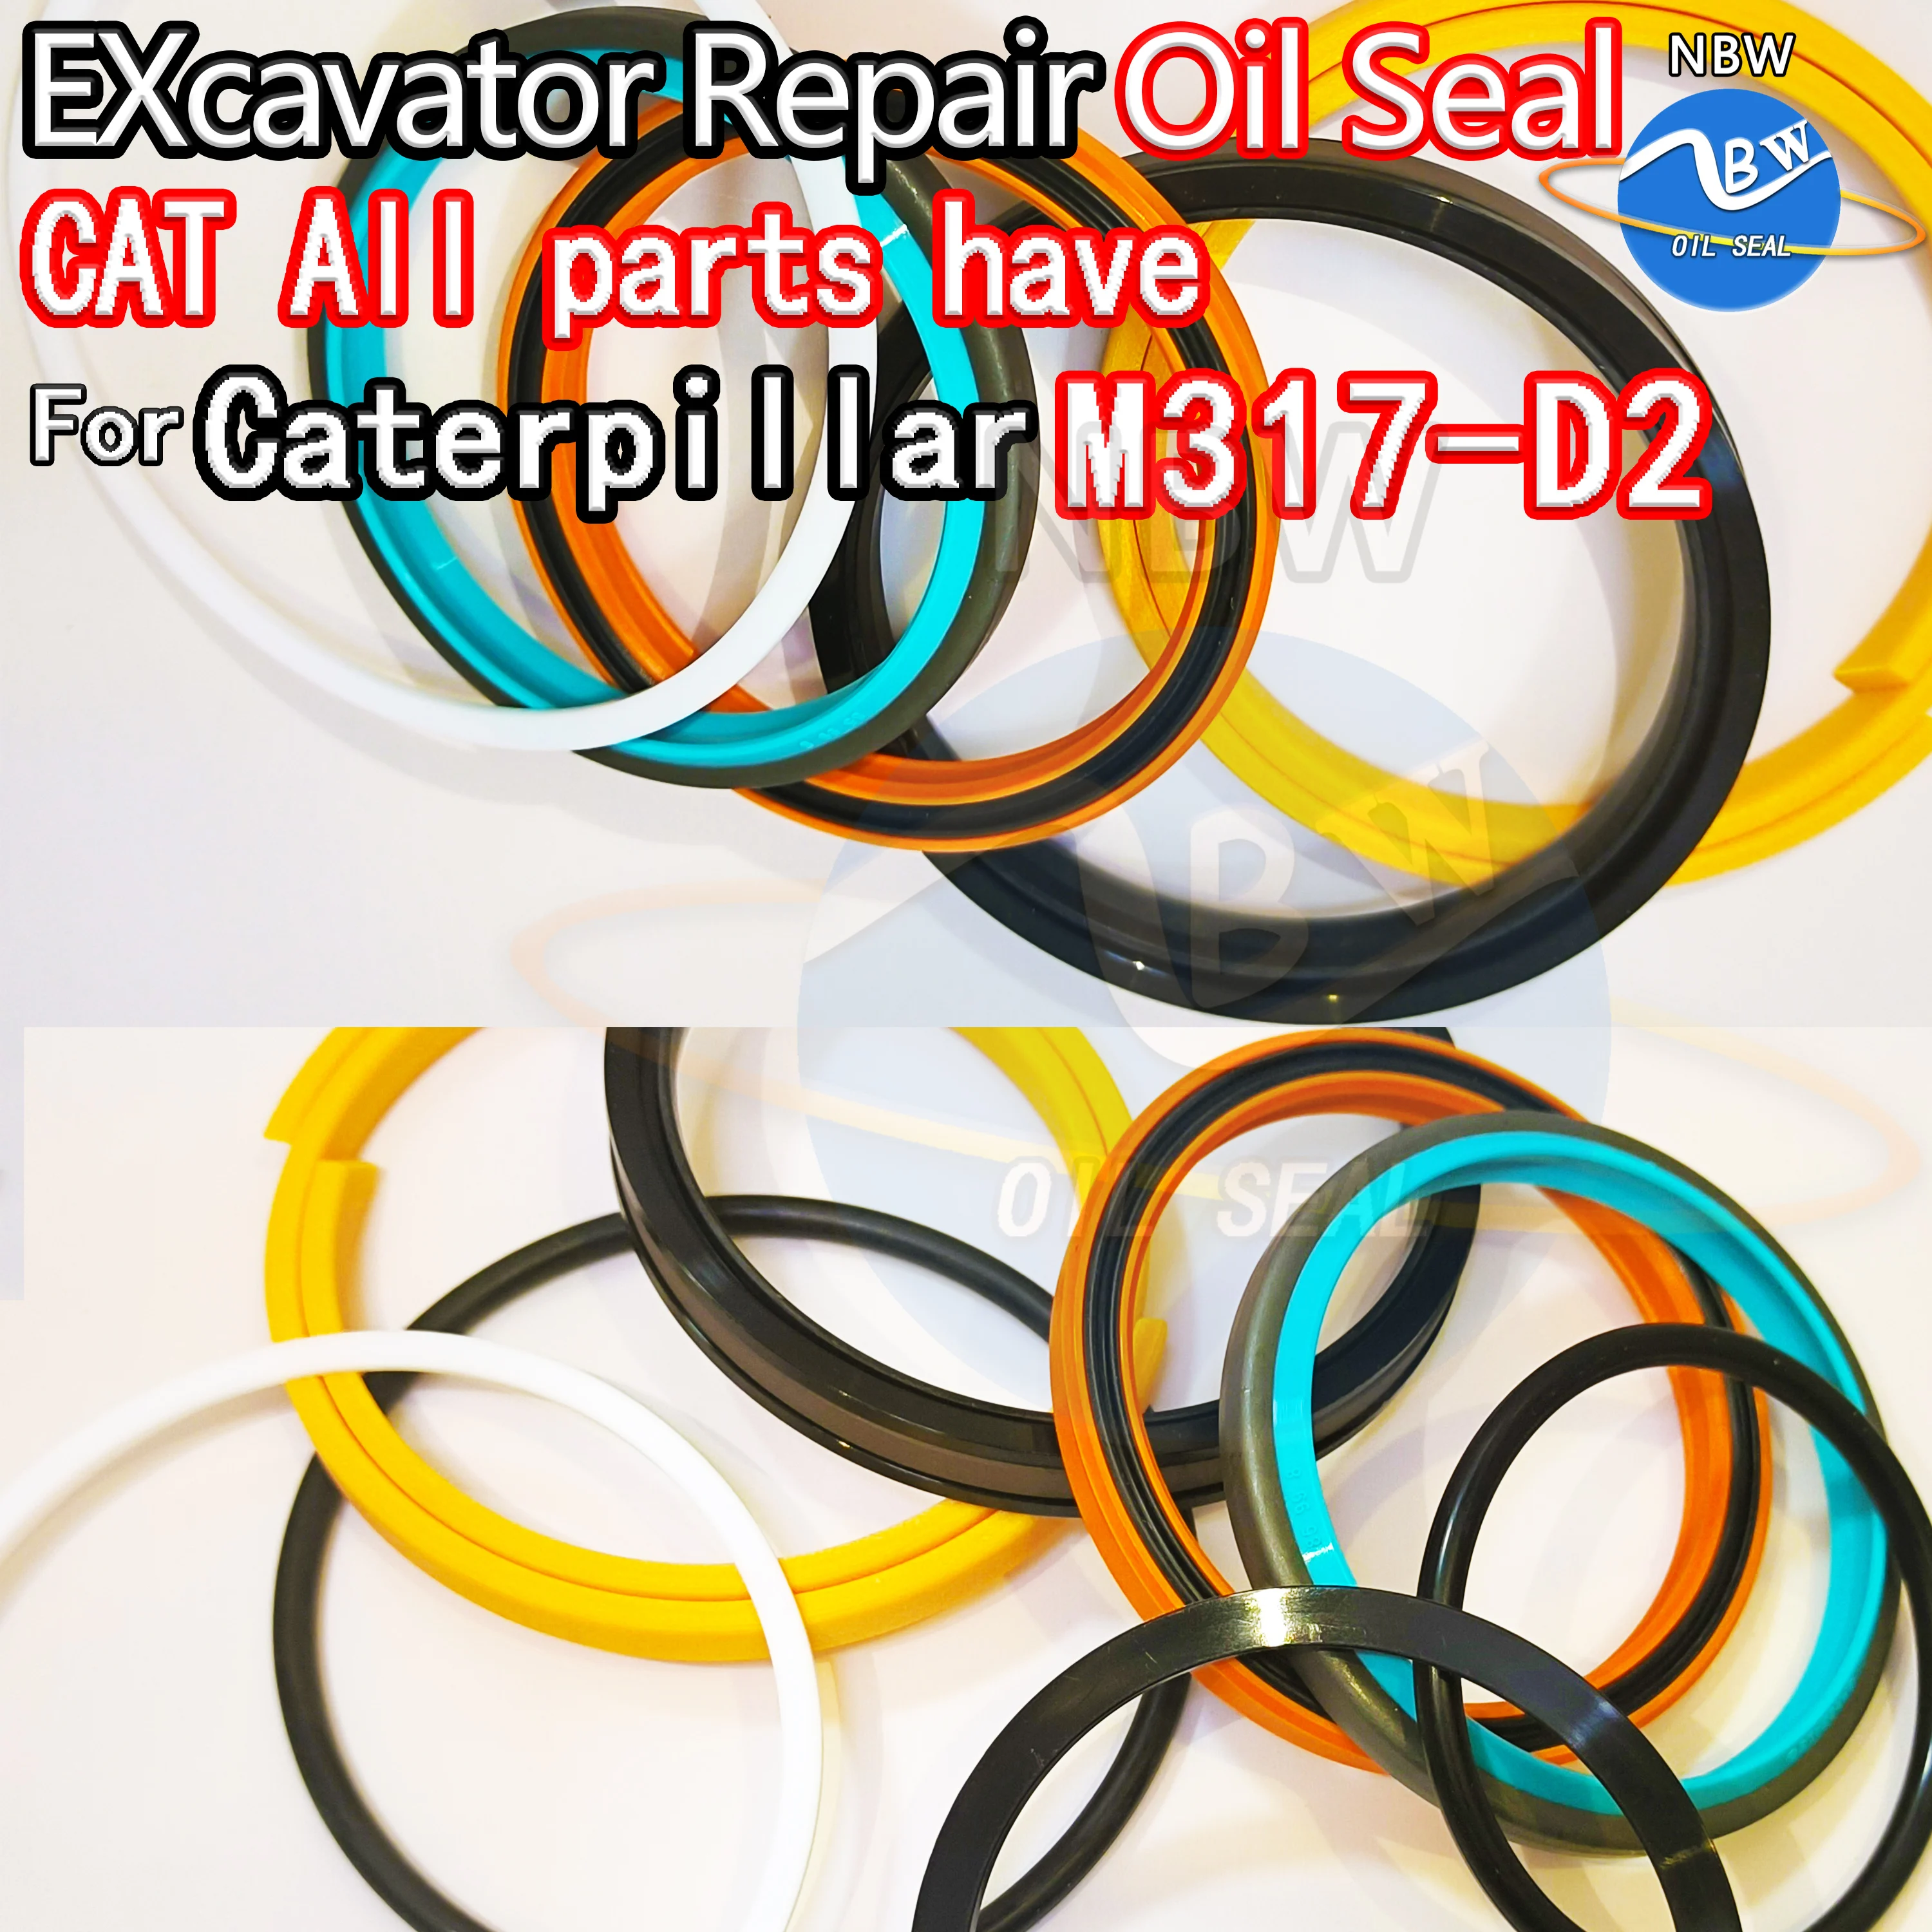 

For Caterpillar M317-D2 Repair Kit Excavator Oil Seal CAT M317 D2 Adjust Swing Gear Center Joint Gasket Nitrile NBR Nok Washer